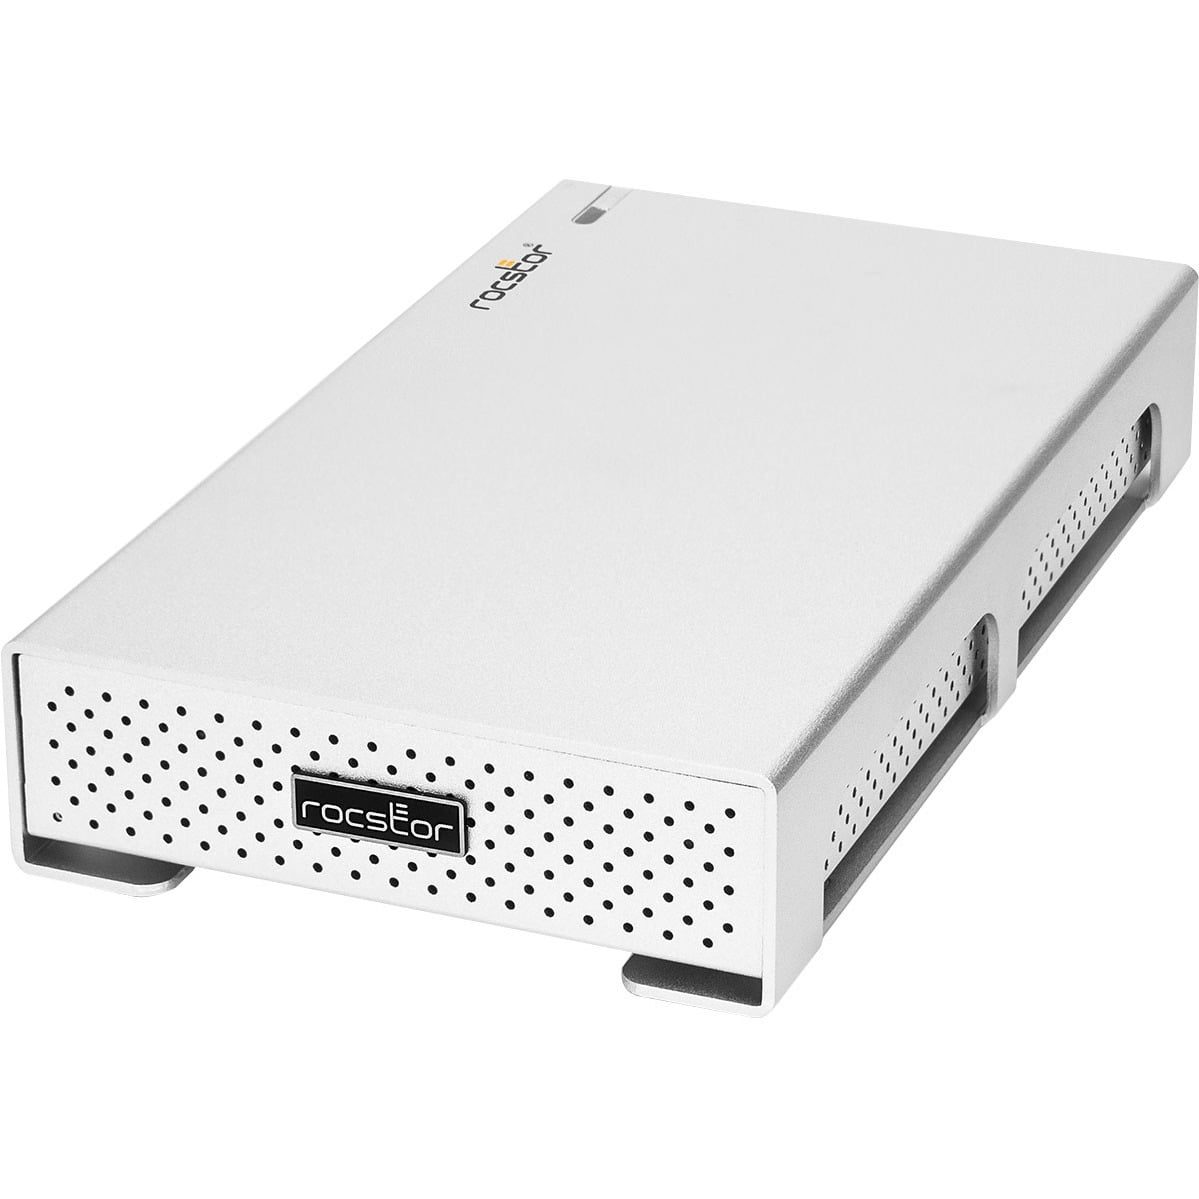 USB 3.1 Gen 2 Rocstor Rocpro 900c USB-C USB 3.0 Desktop External Hard Drive Enclosure only G29100-01 10Gbps, 